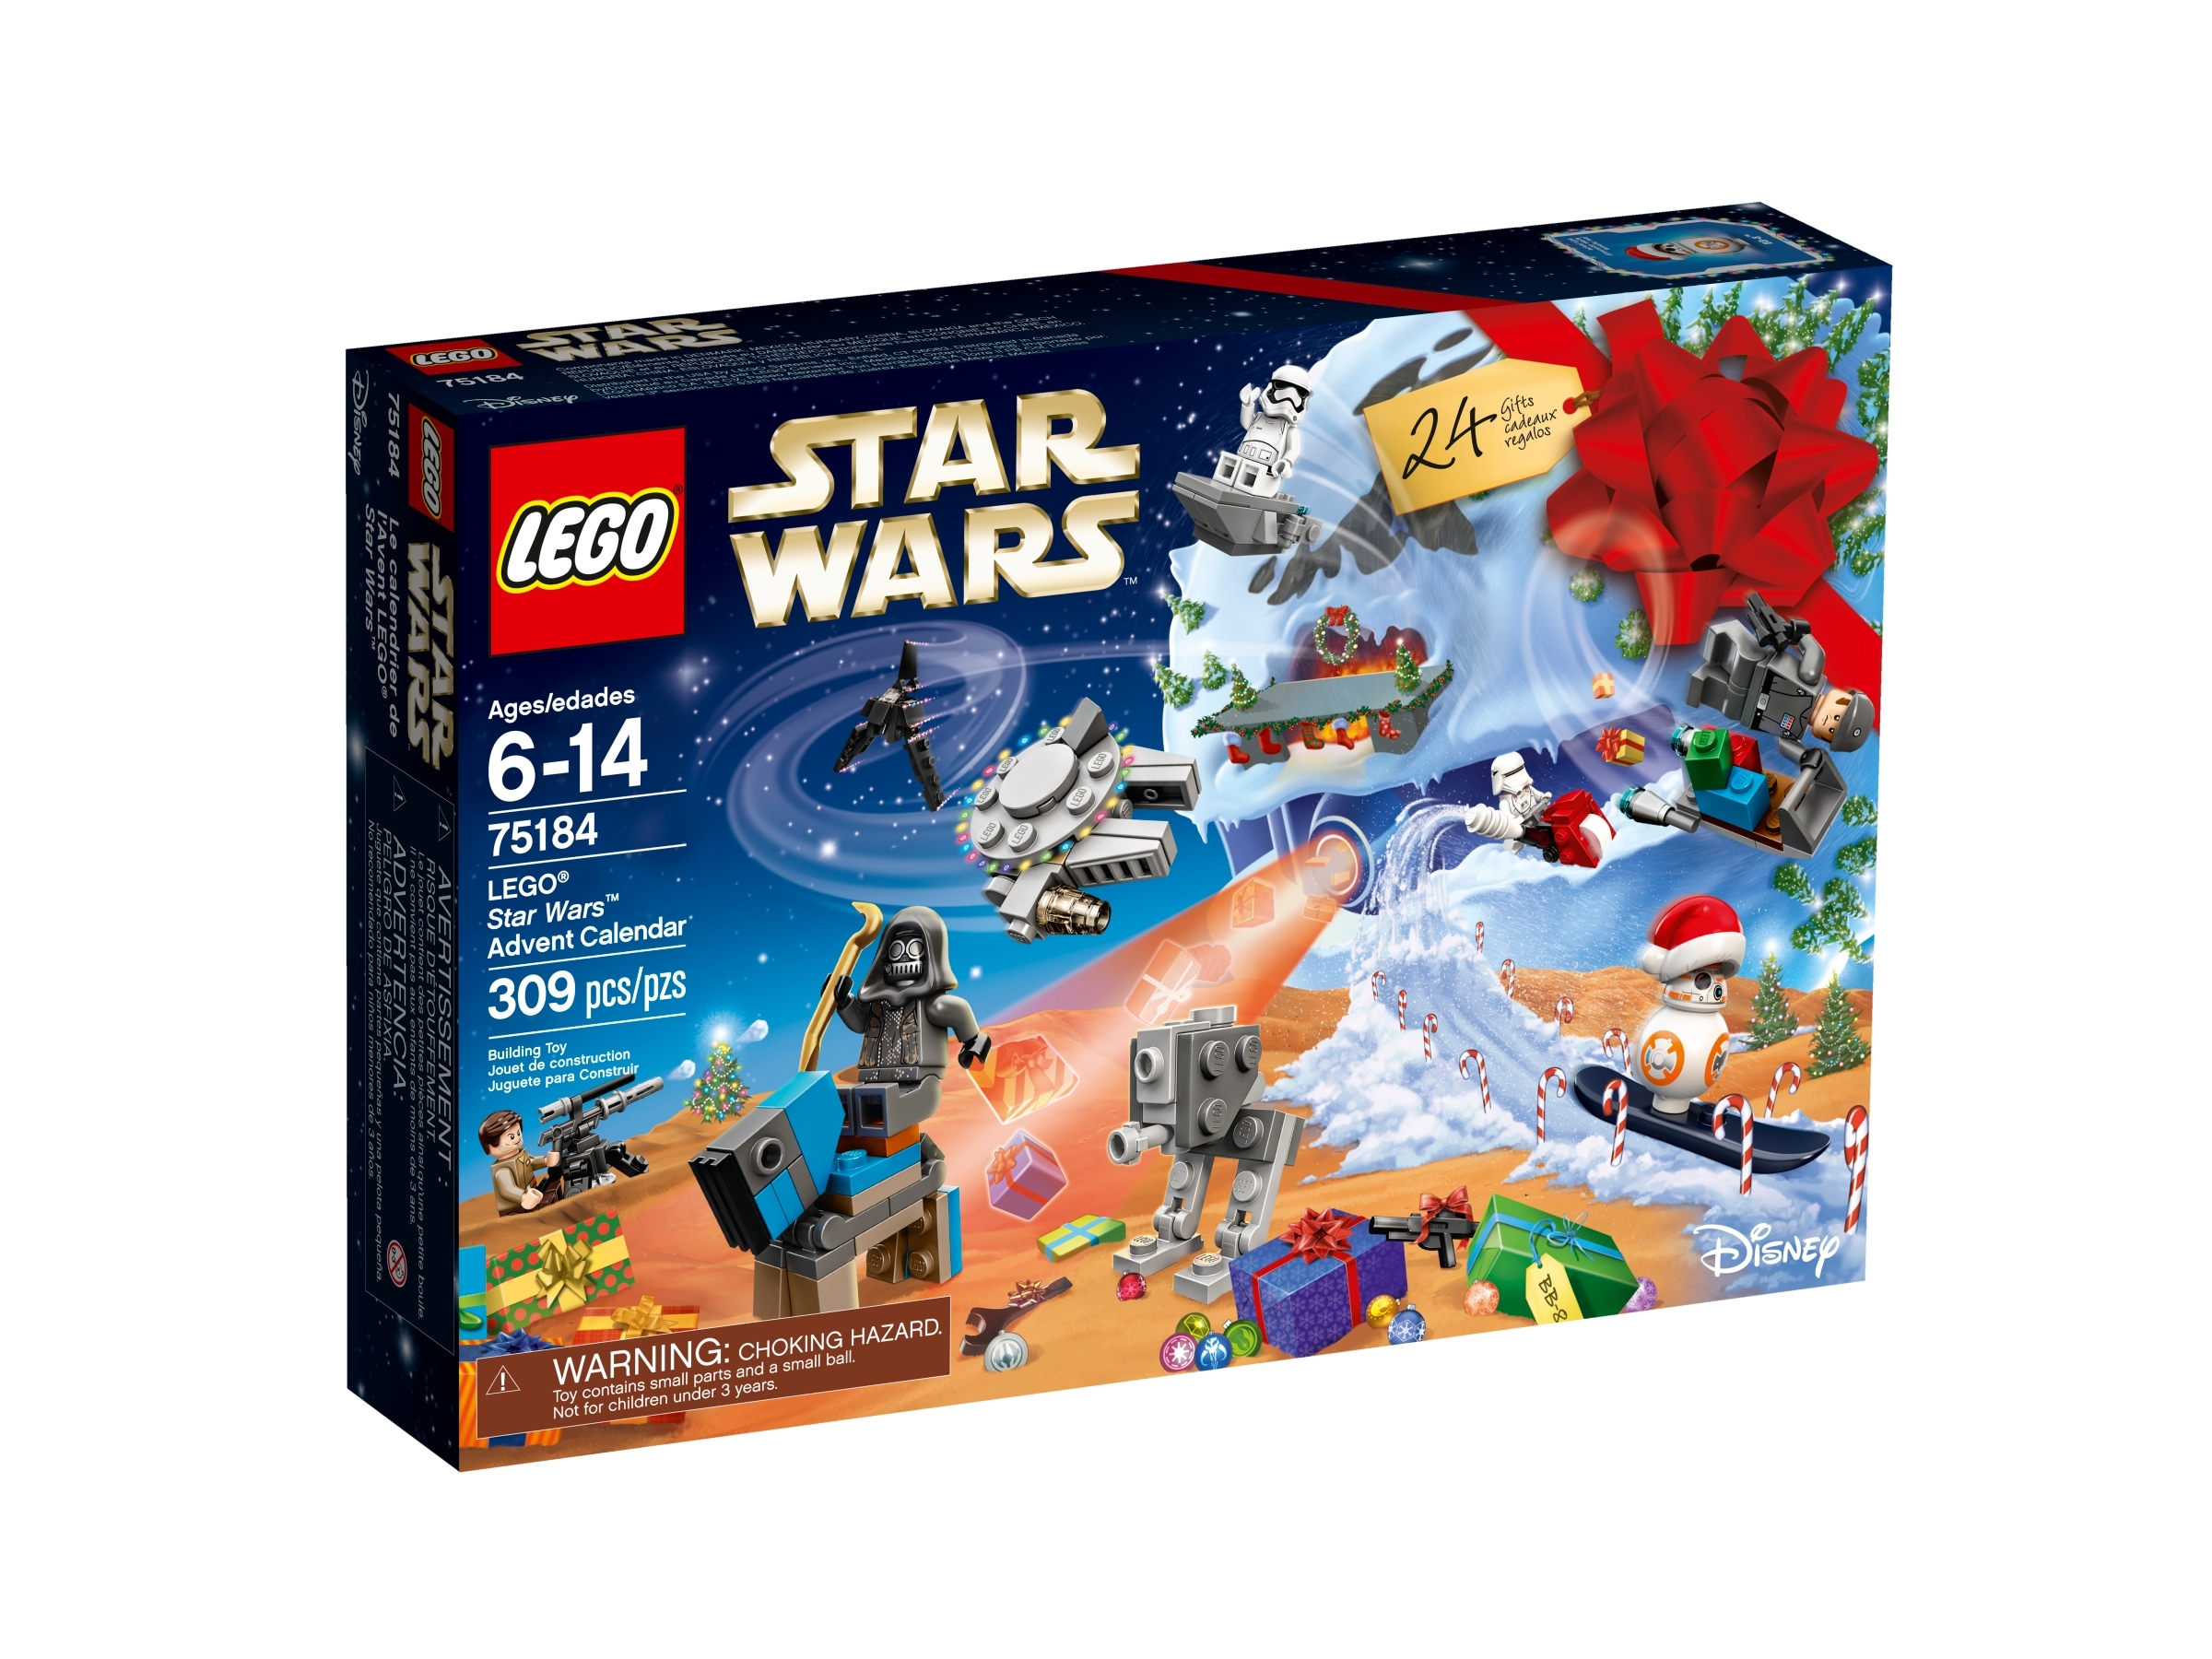 Lego Star Wars Advent Calendar 75184 vlr eng br